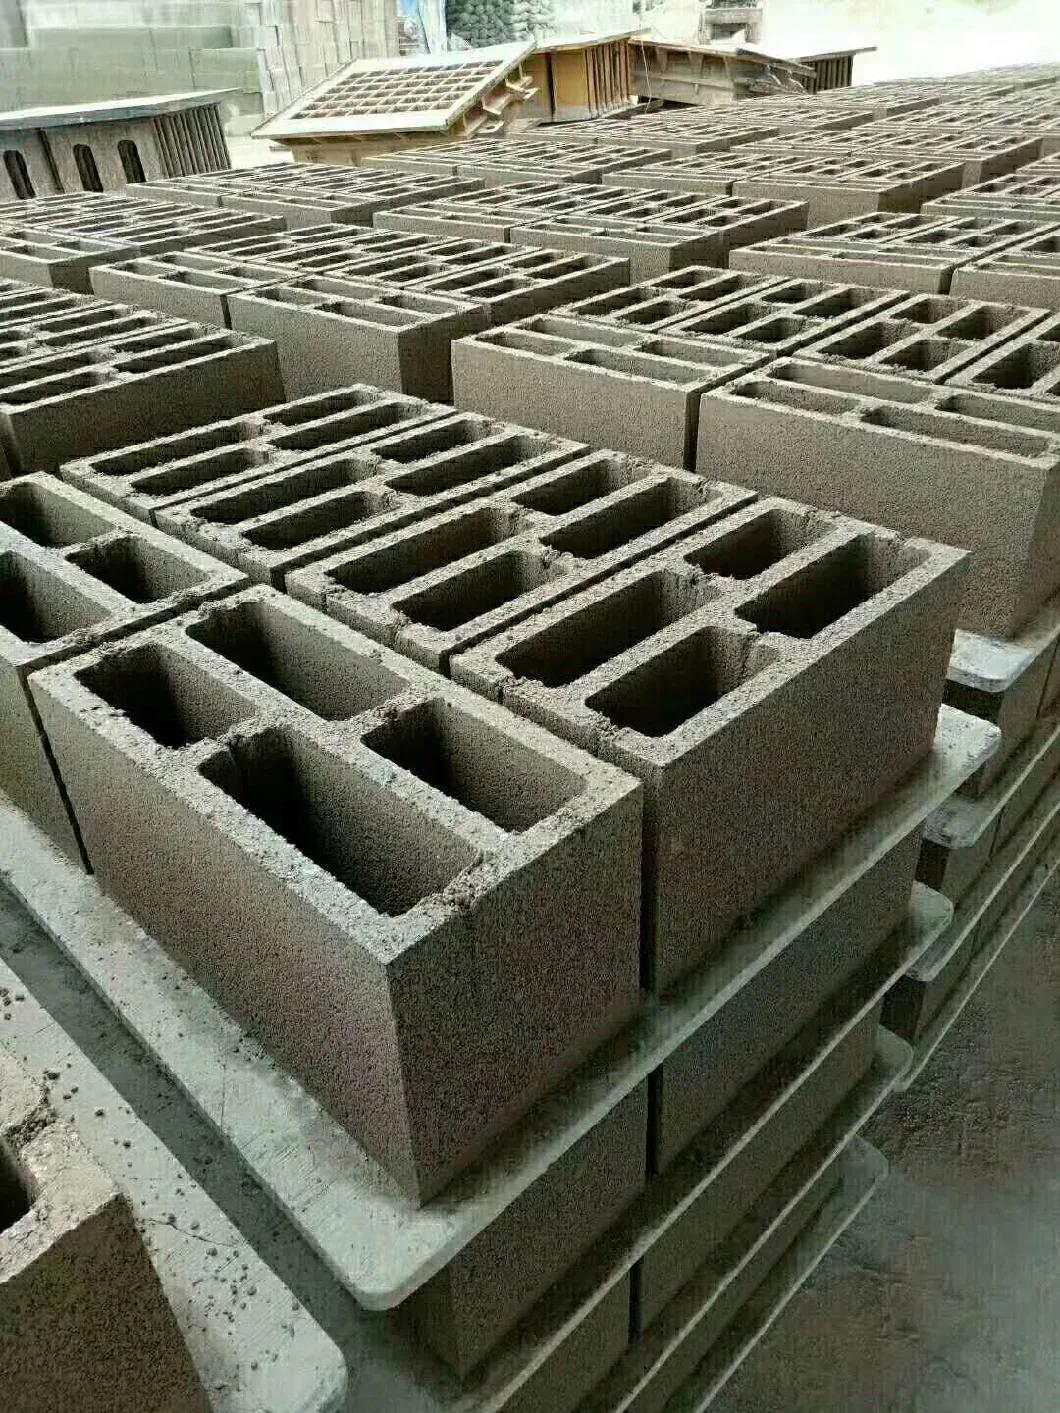 Full Automatic Concrete Brick Making Equipment